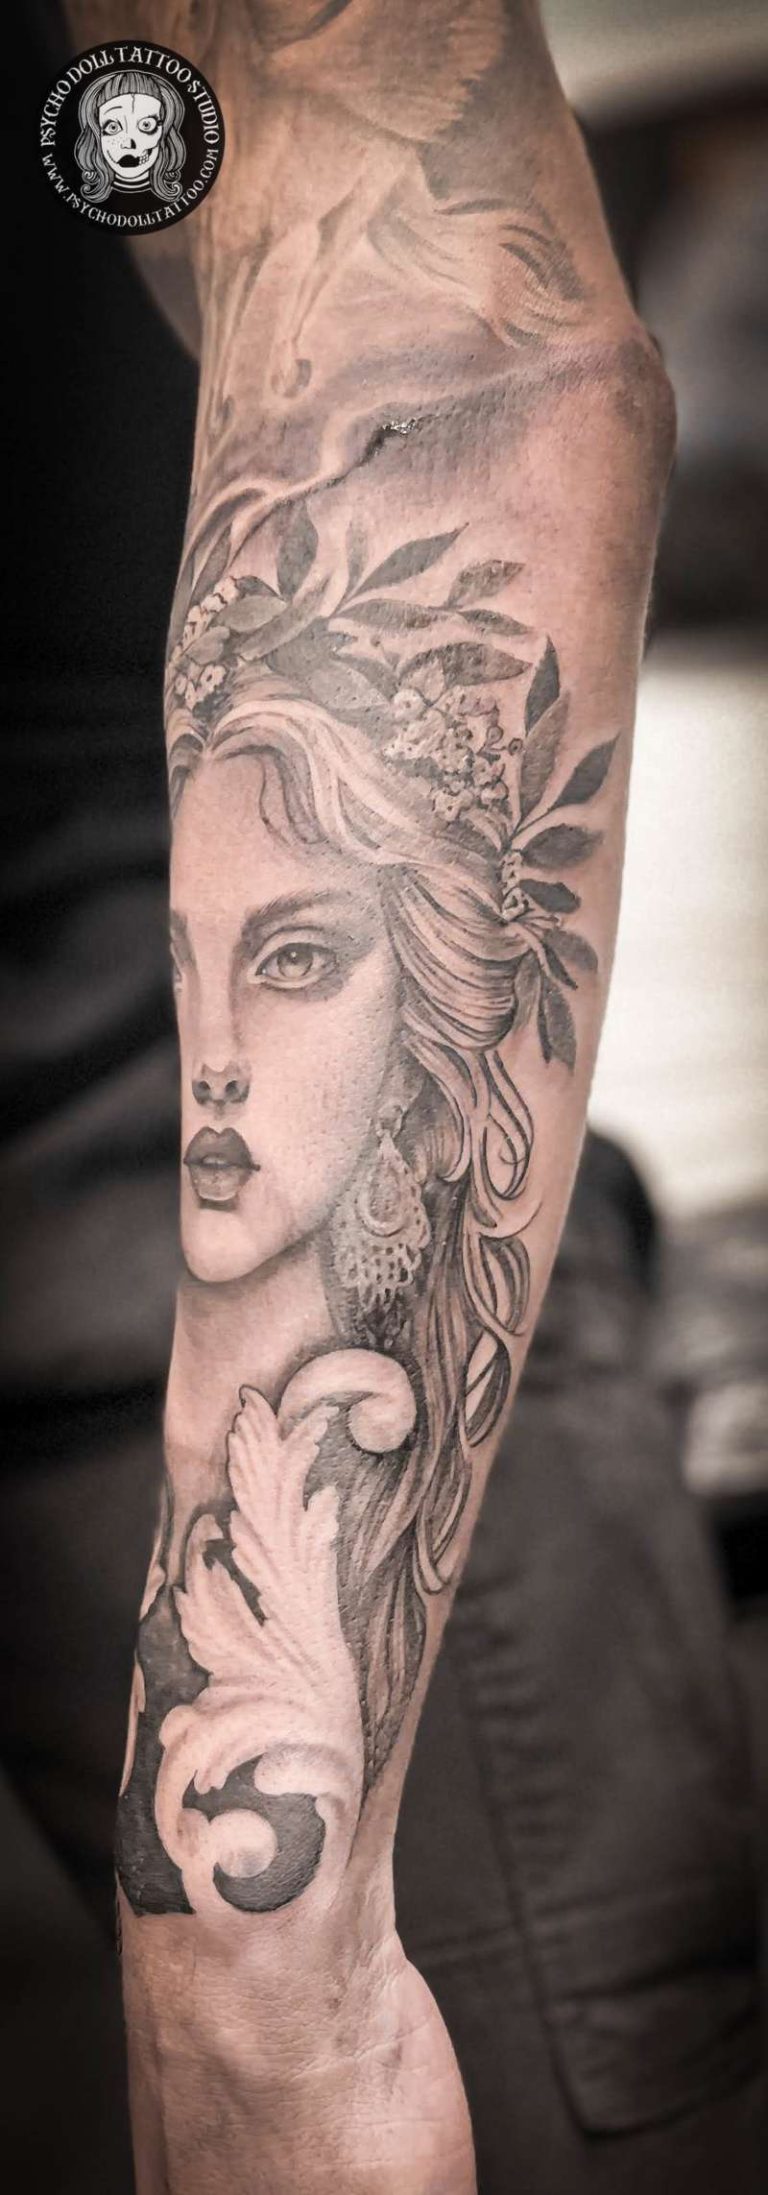 Griekse godin-tatoeage